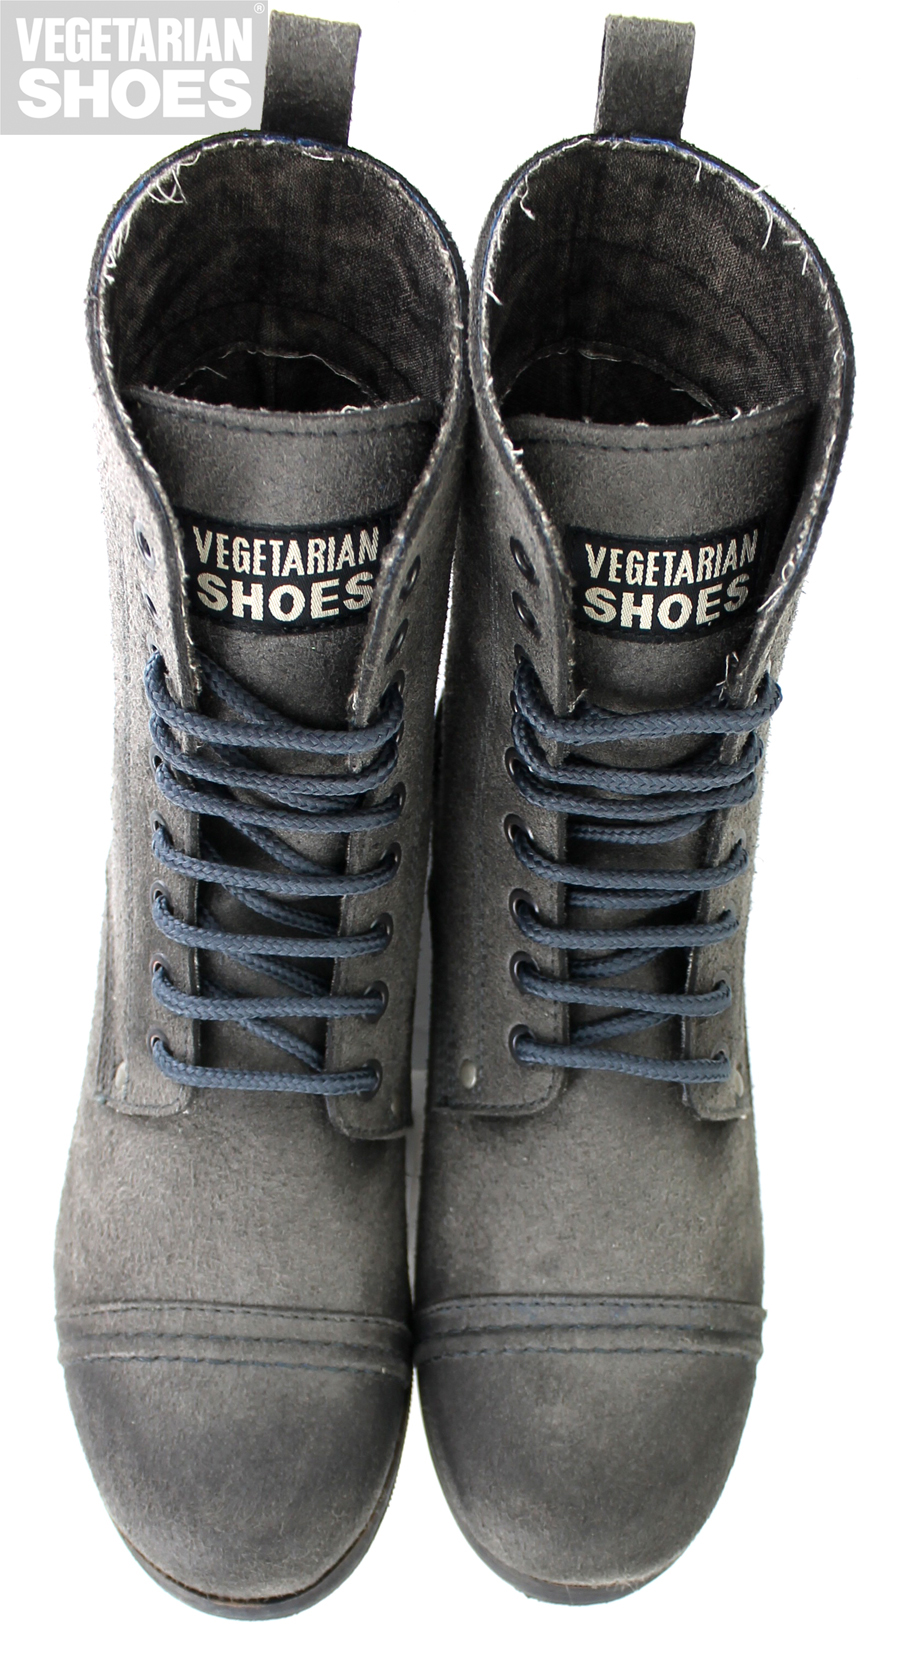 vegetarian shoes vintage boot